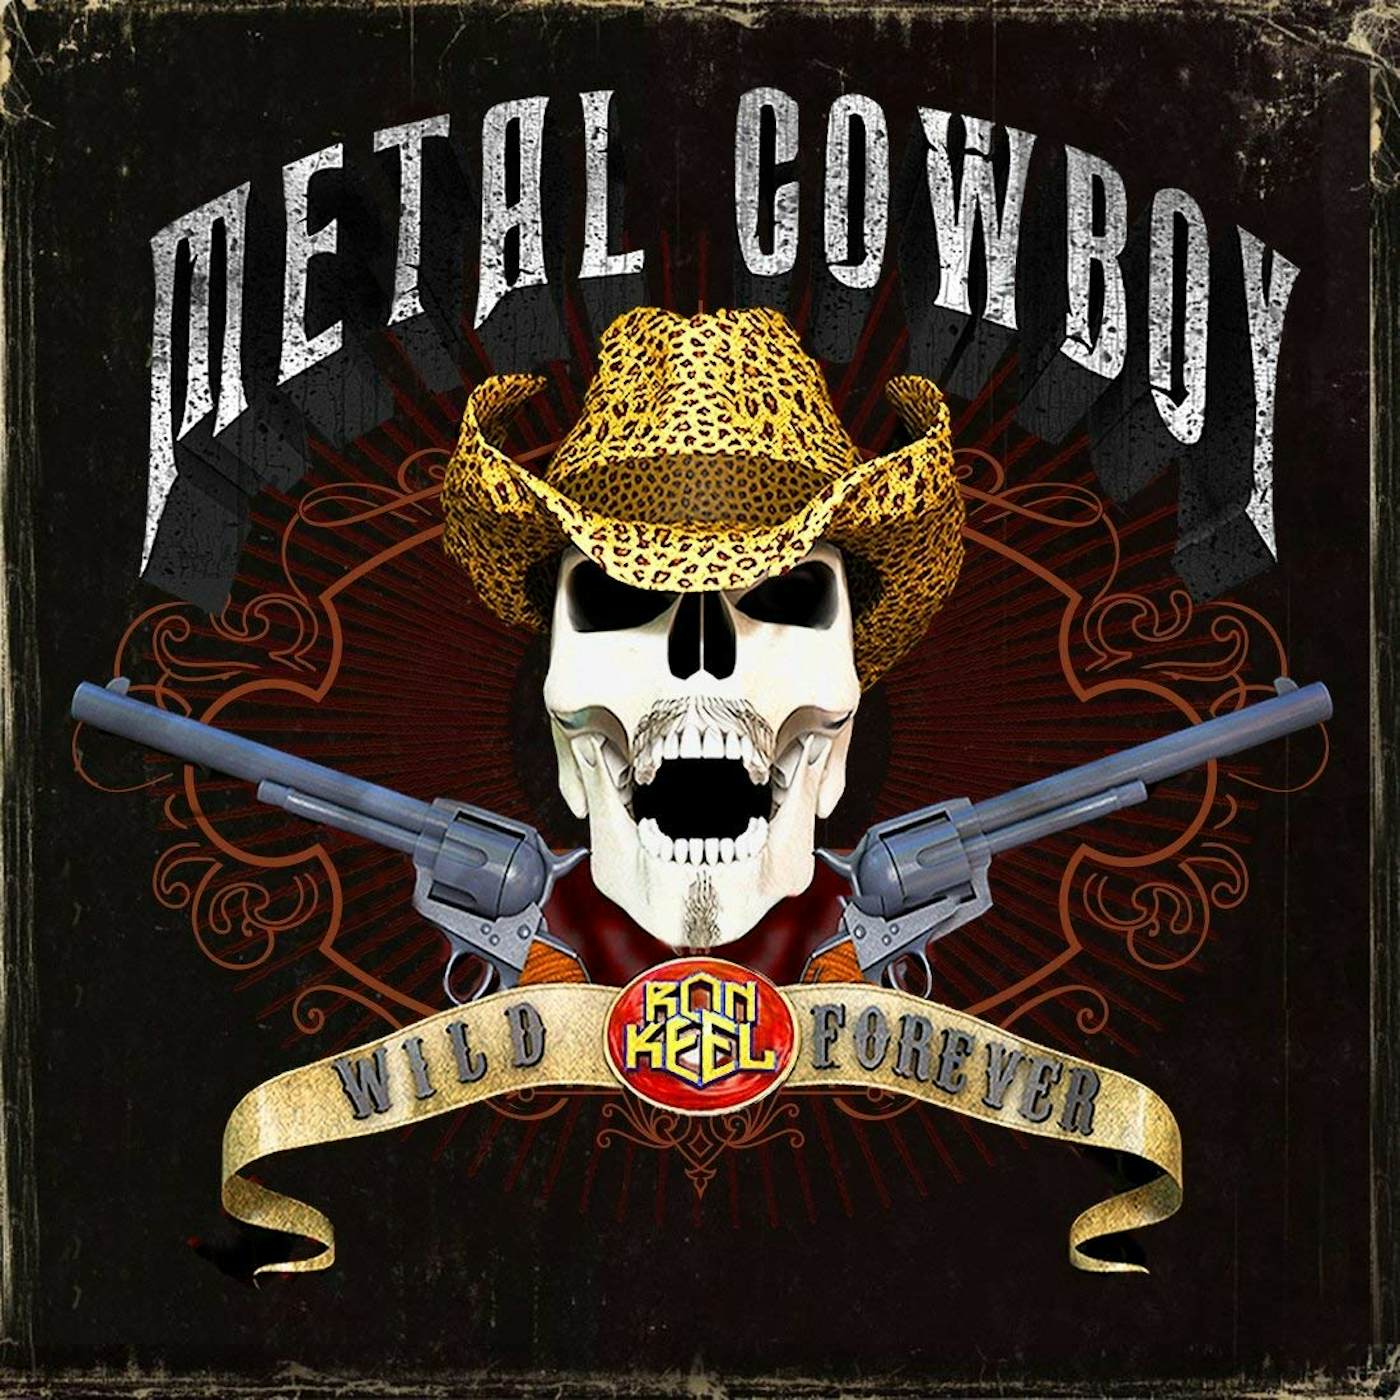 Ron Keel Metal Cowboy Vinyl Record